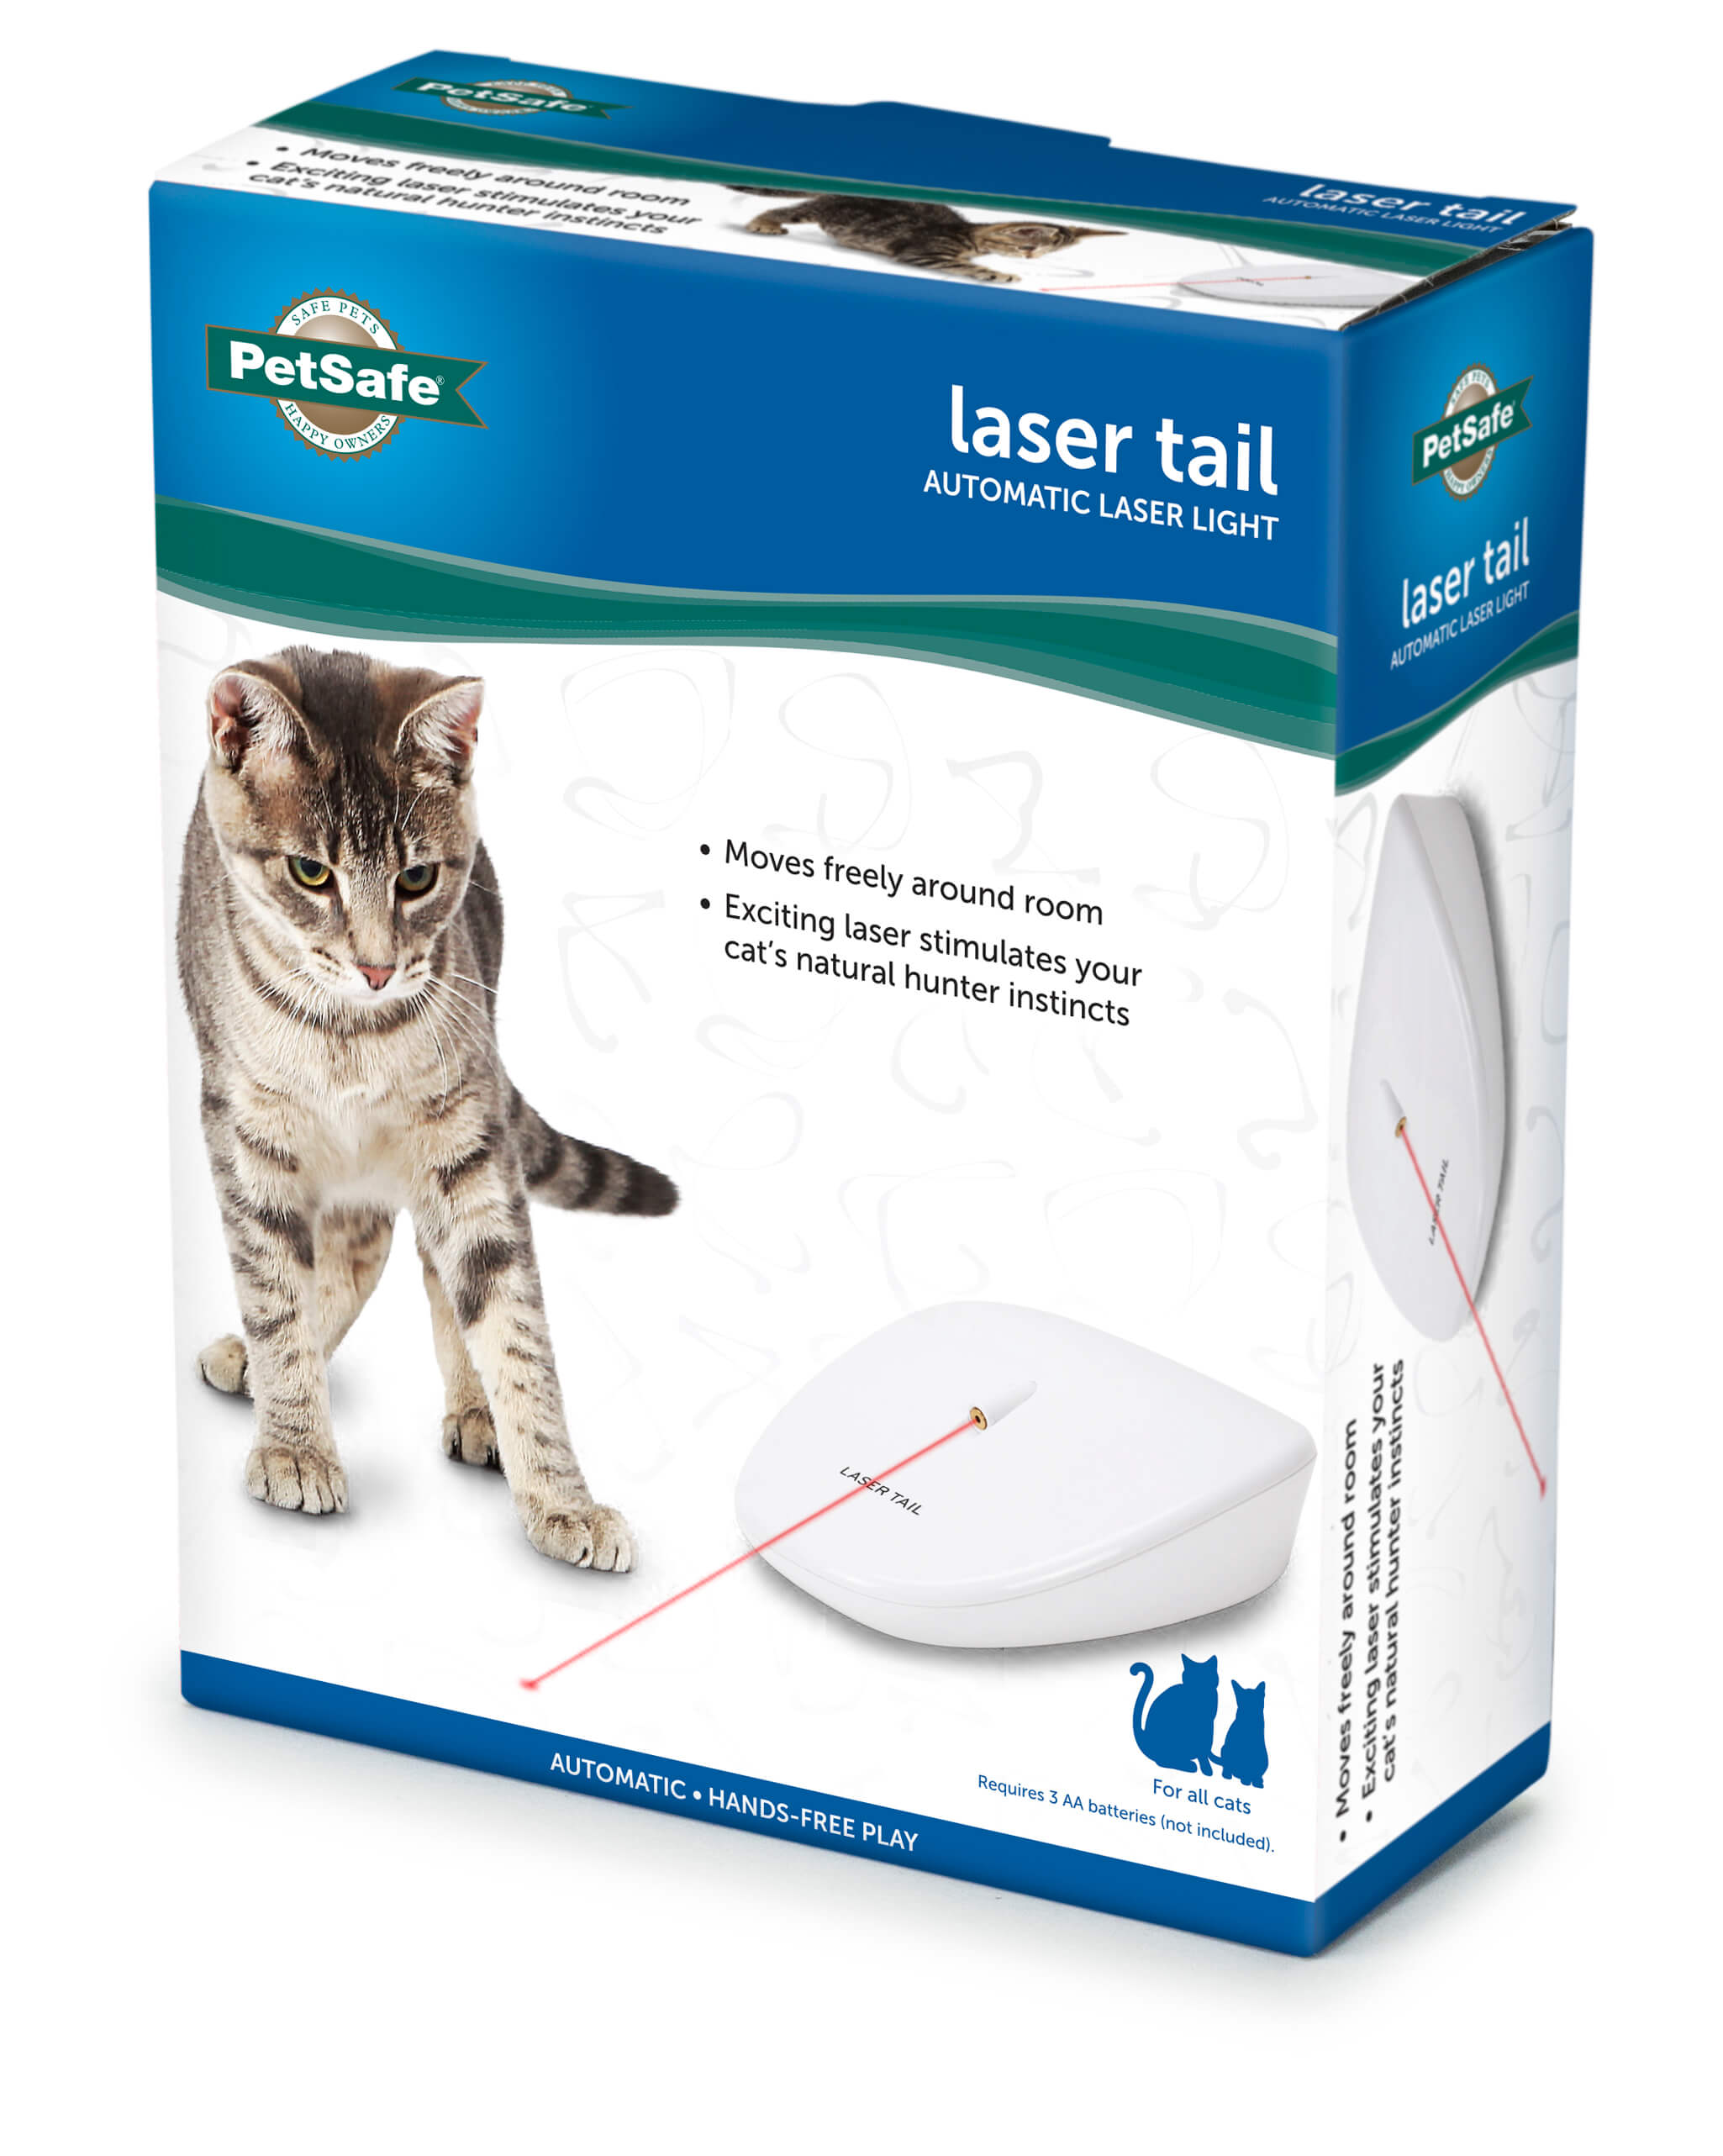 Petsafe laser tail cat toy